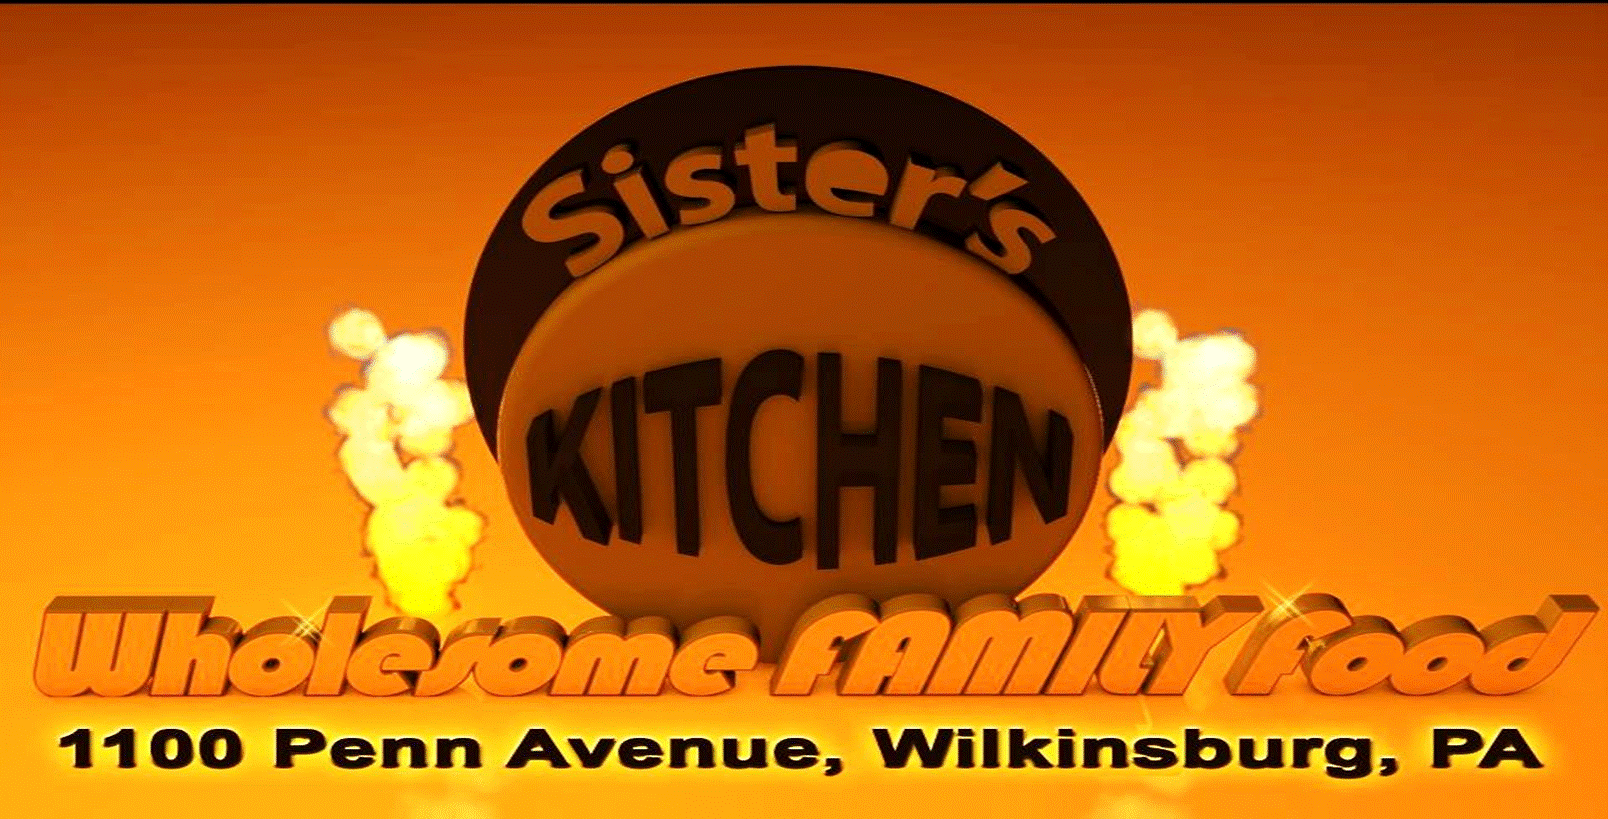 Sister's Kitchen Neighborhood Take Out